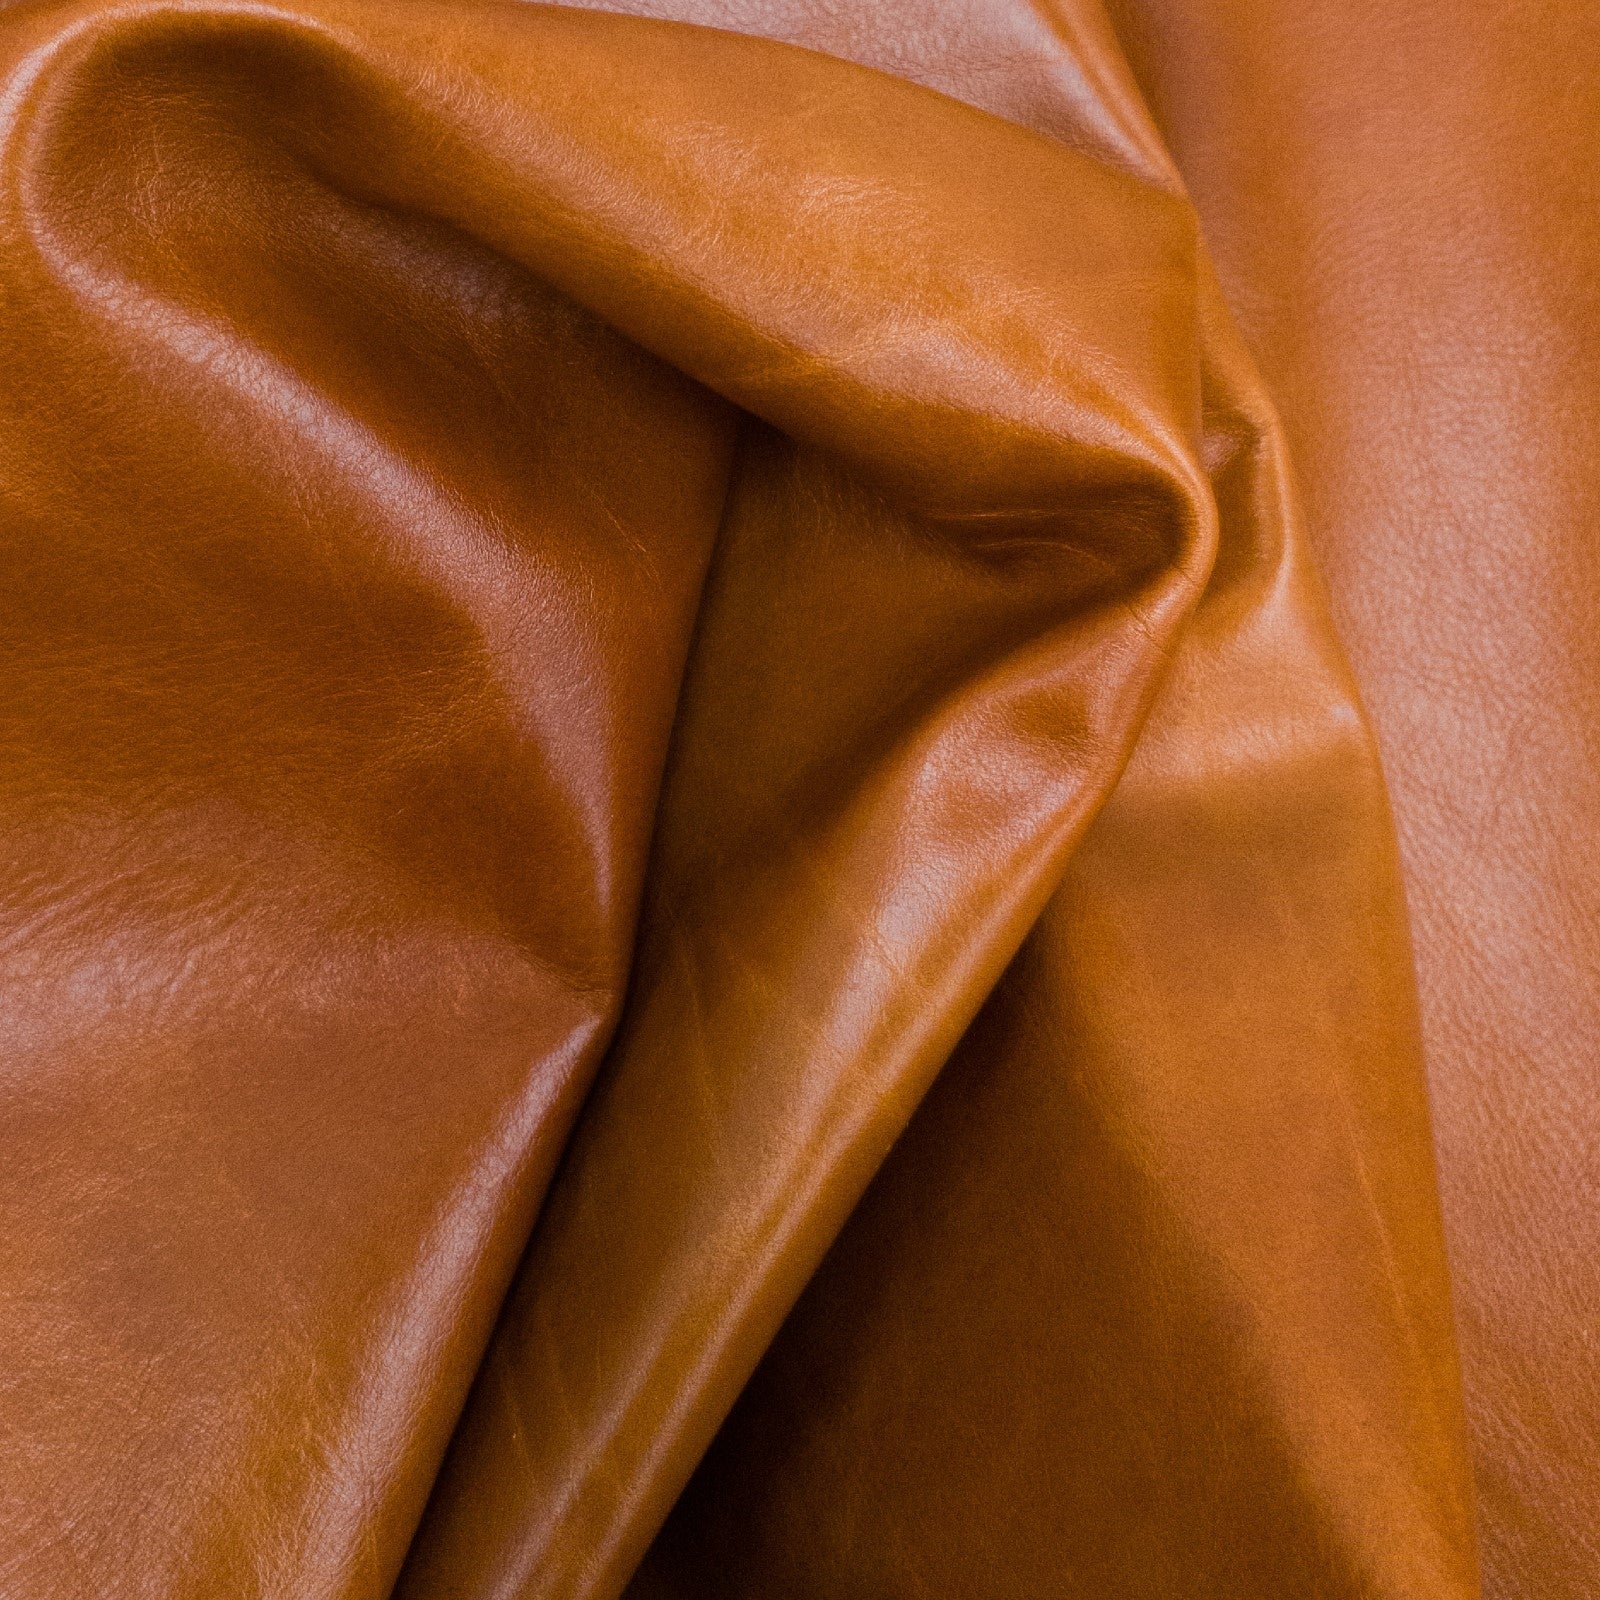 Orange, 2-3 oz, 41-64 SqFt, Full Upholstery Cow Hides, Old Fashion Orange / 41-48 / 3-4oz | The Leather Guy